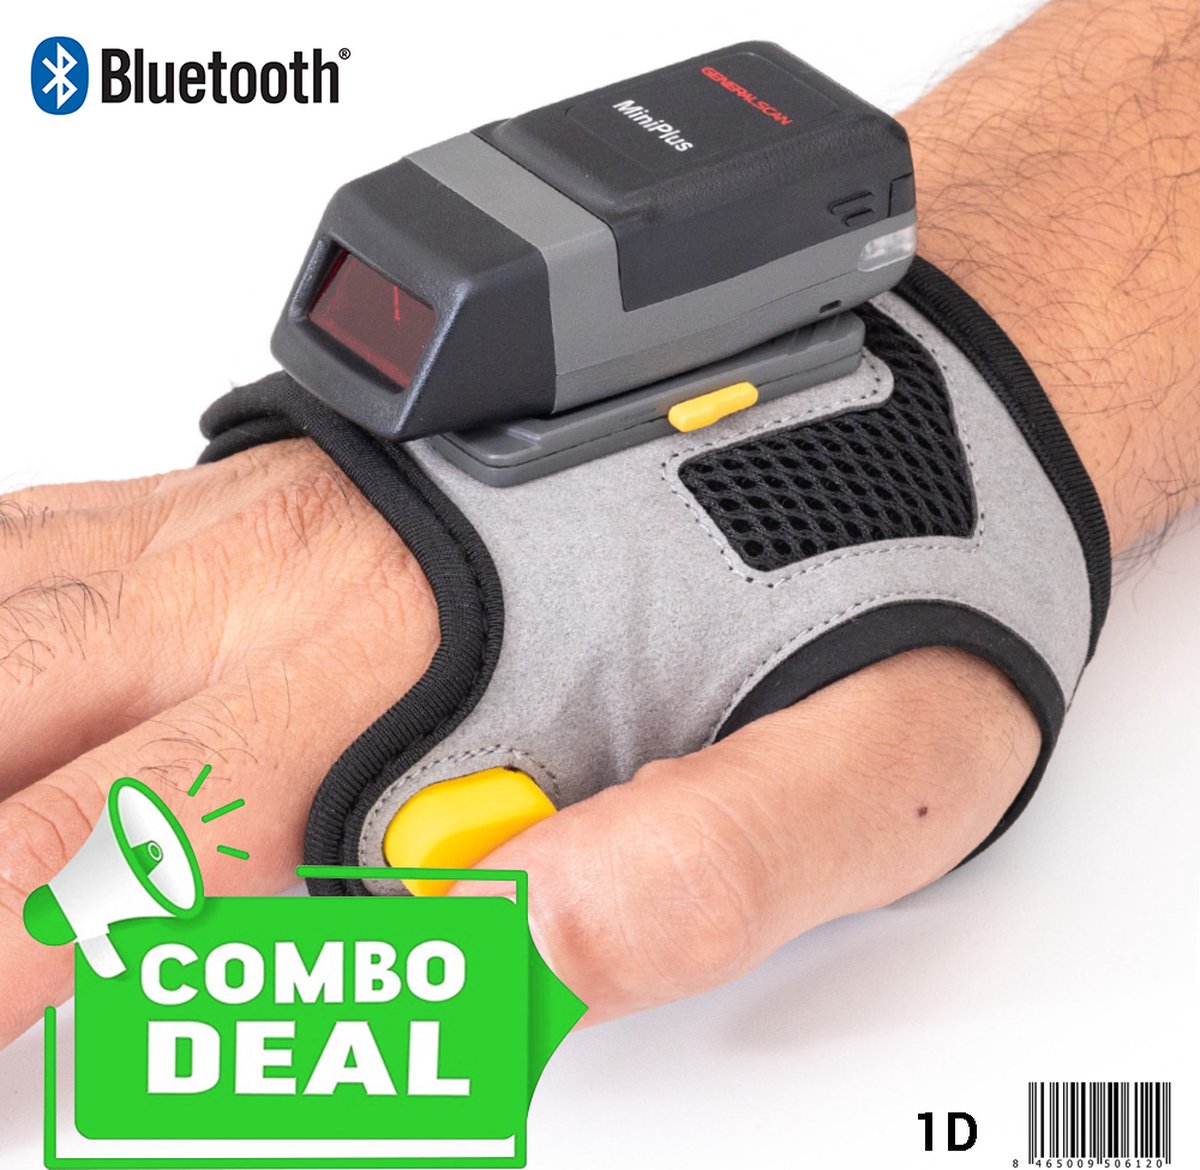 Generalscan GS R1120 with Scan Glove - Bluetooth 1D Barcode scanner - Combi Deal - 1D-barcodes - Handscanner